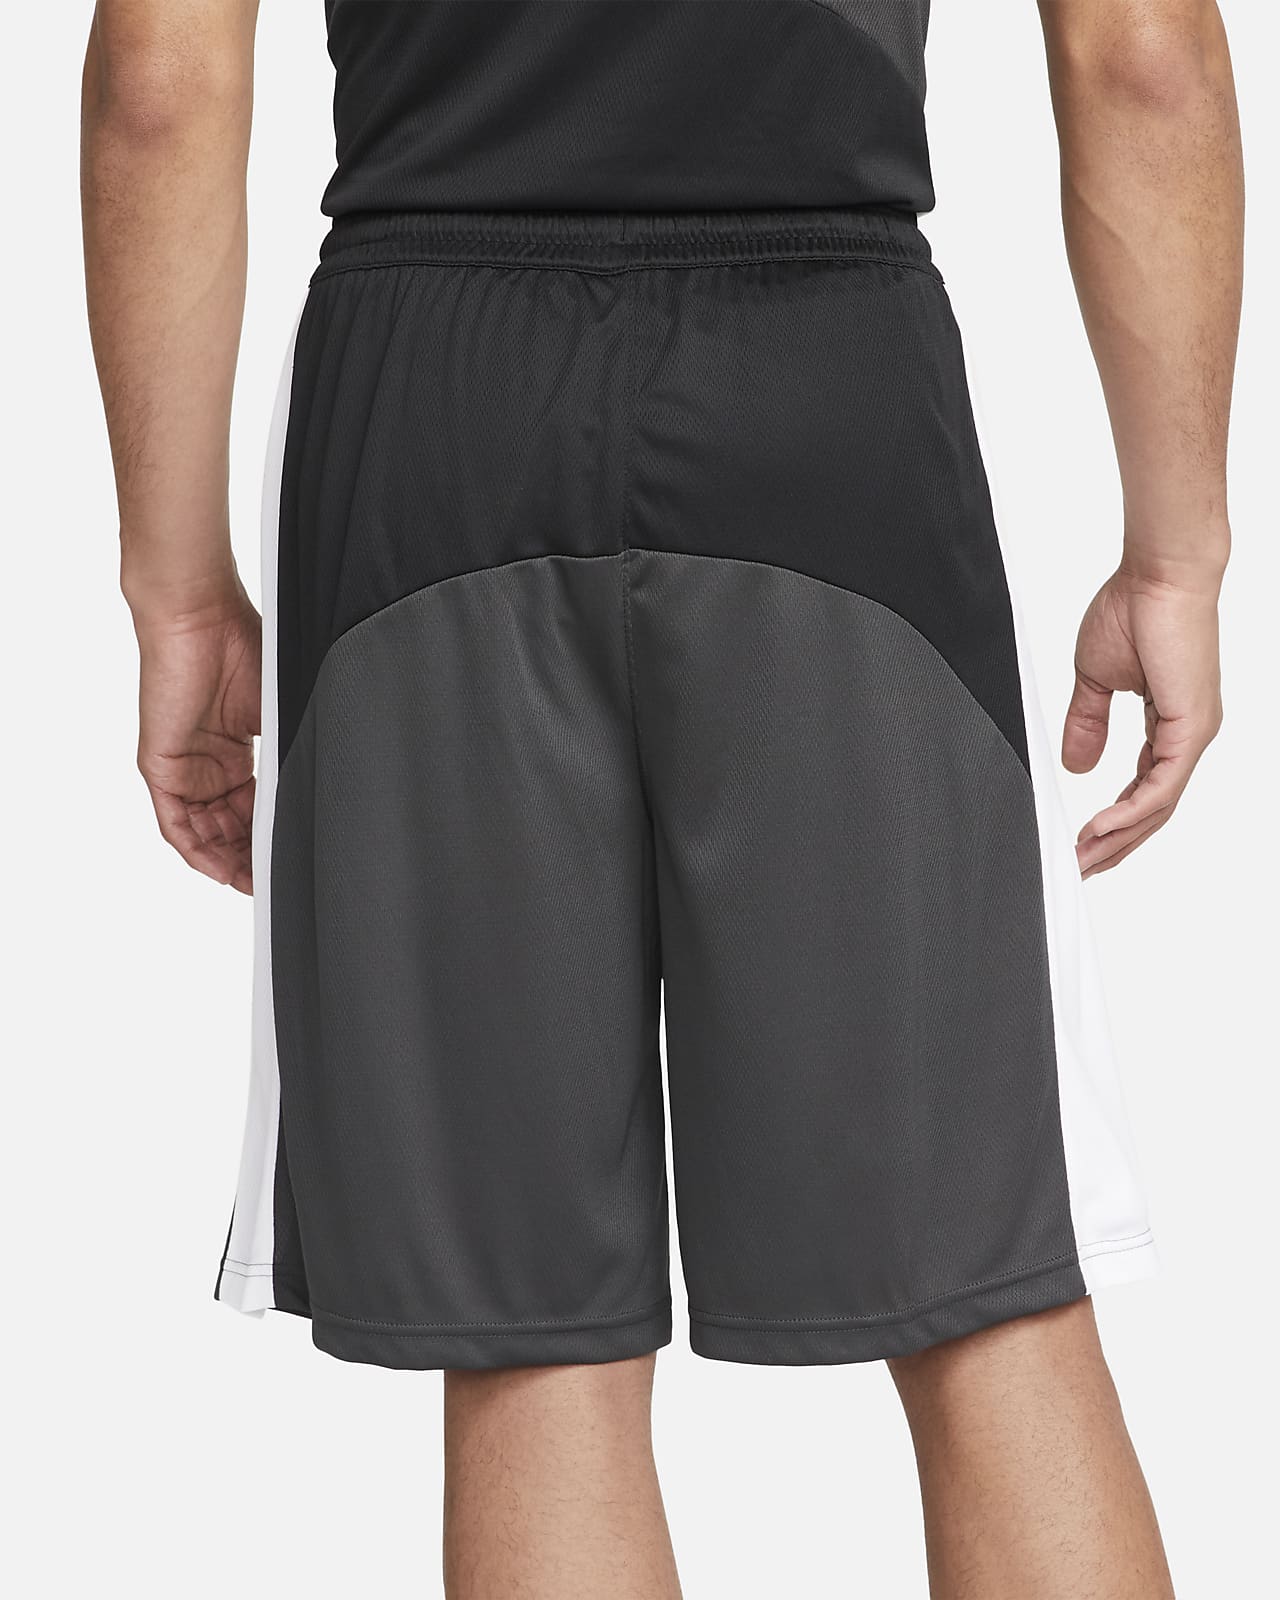 Calvo Morbosidad emparedado Nike Dri-FIT Starting 5 Pantalón corto de baloncesto de 28 cm - Hombre.  Nike ES